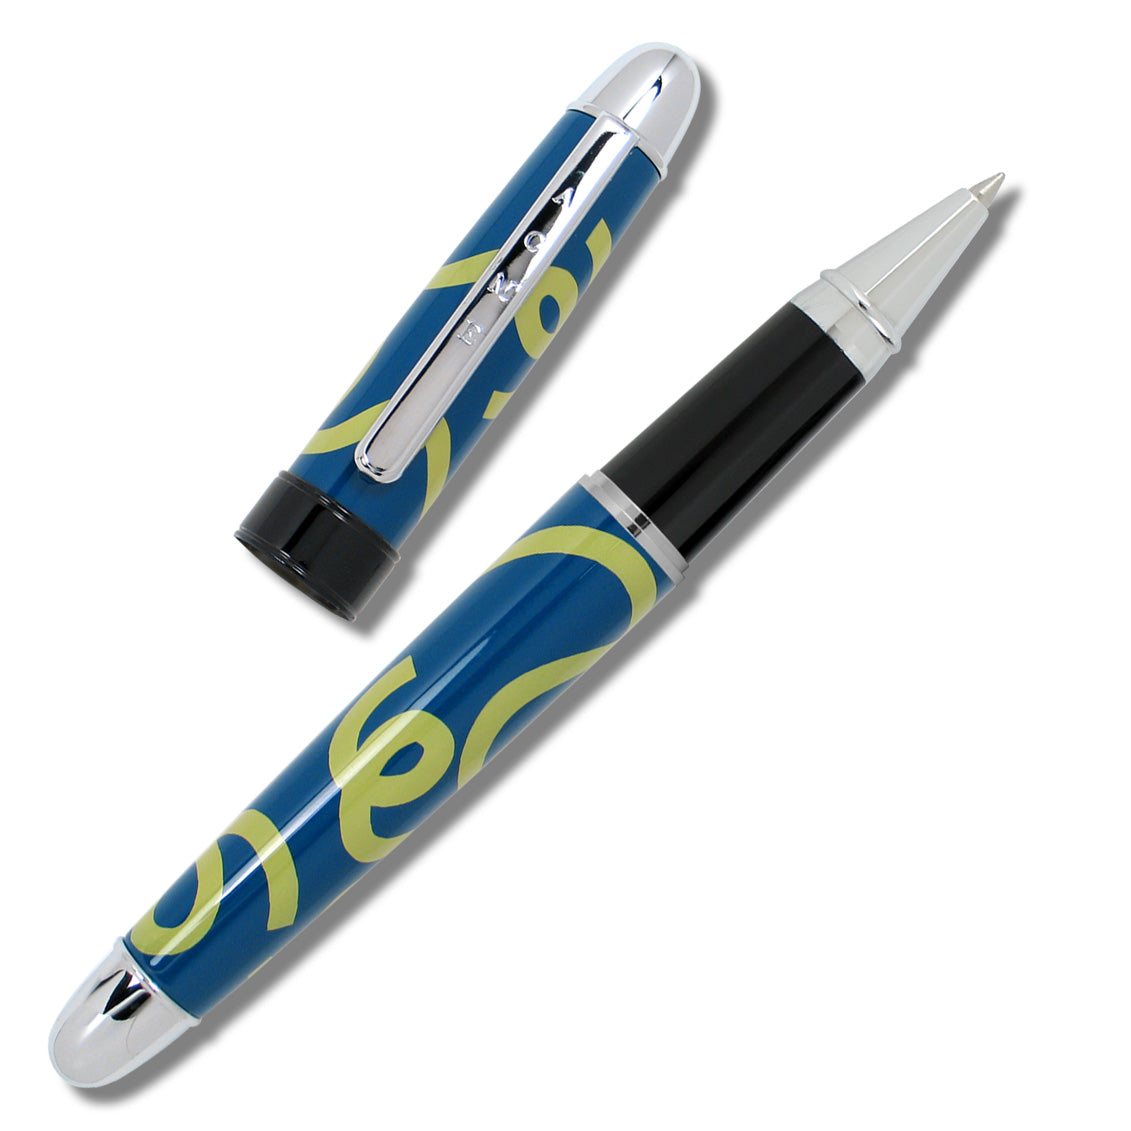 ACME Studio "Shorthand" Roller Ball Pen by Designer TASSILO VON GROLMAN - NEW